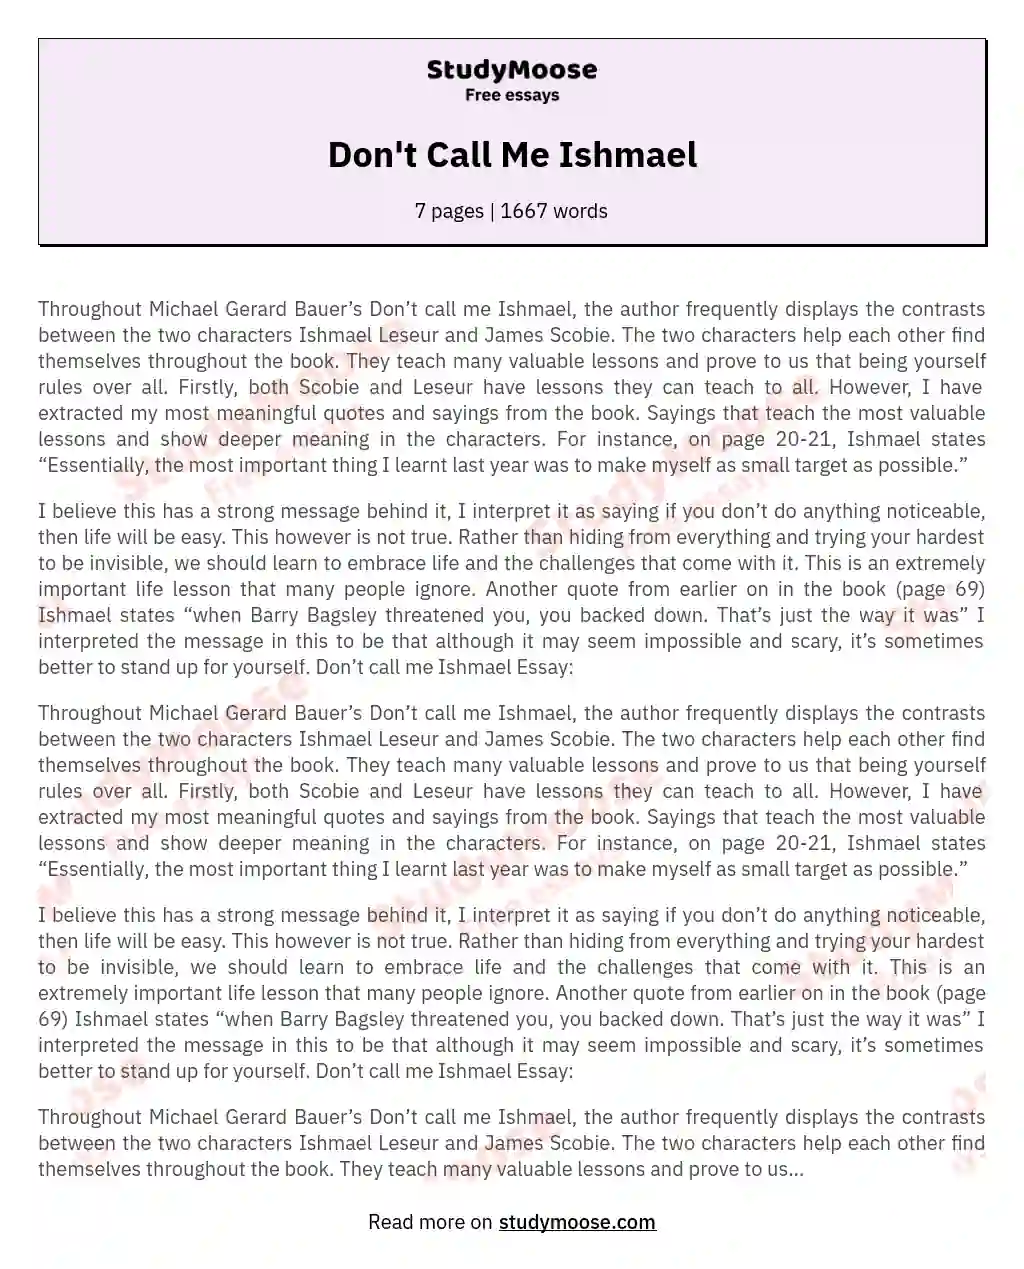 Don't Call Me Ishmael essay